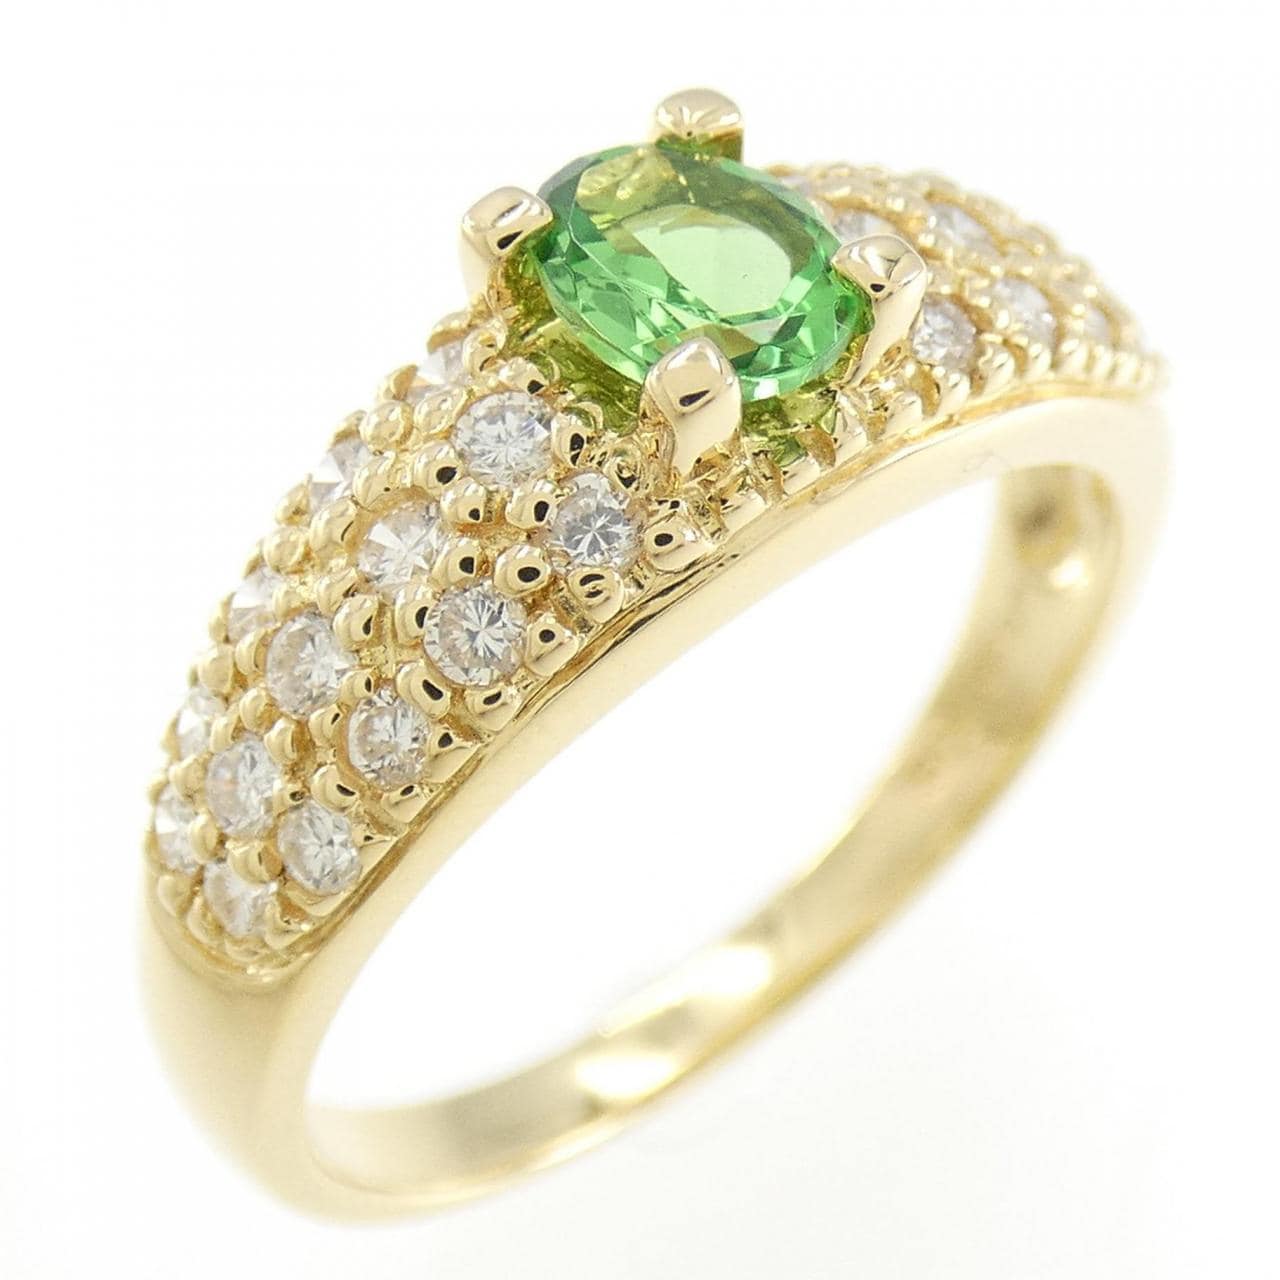 K18YG Green Garnet Ring 0.37CT